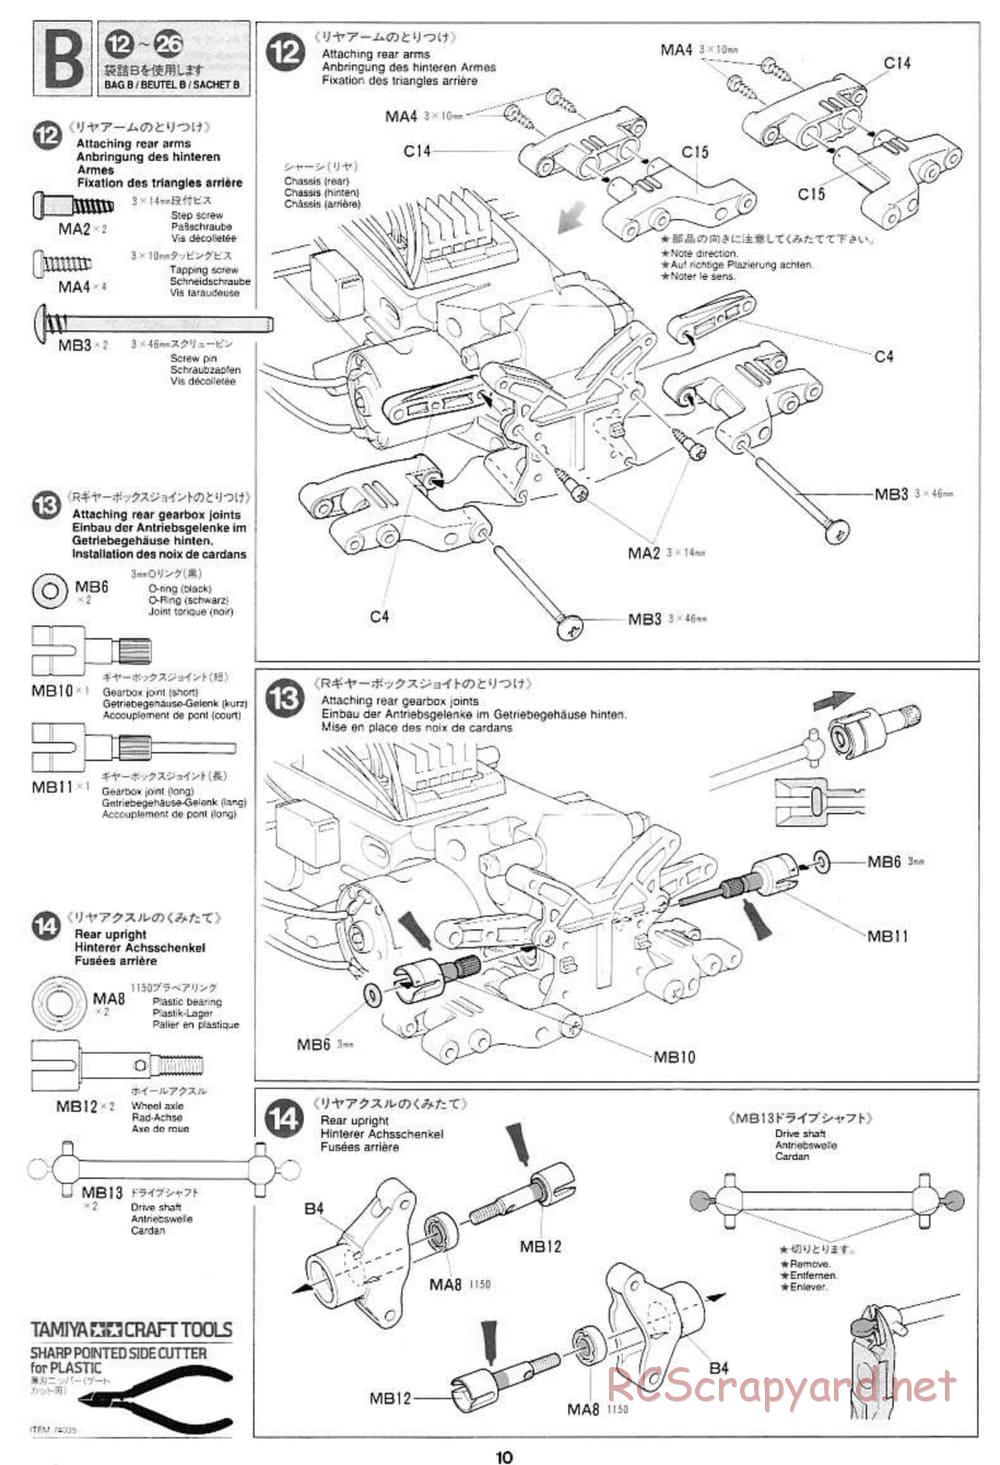 Tamiya - Ford SVT F-150 Lightning - TL-01 Chassis - Manual - Page 10